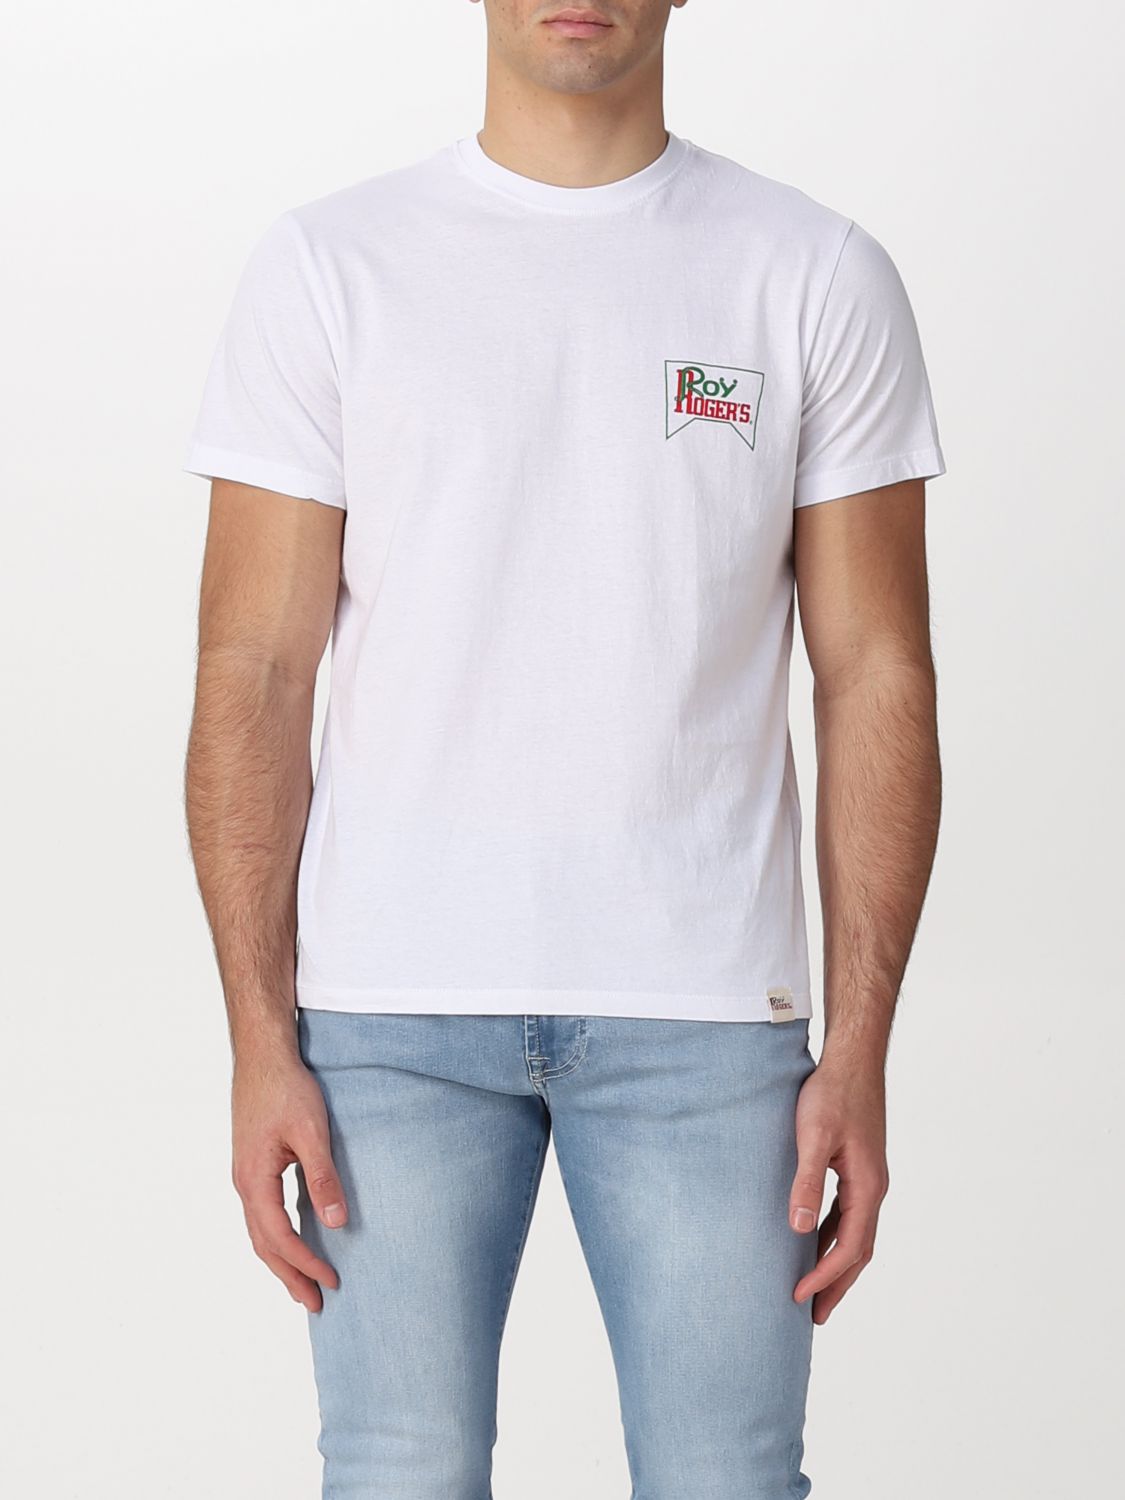 T-Shirt Roy Rogers: T-shirt herren Roy Rogers weiß 1